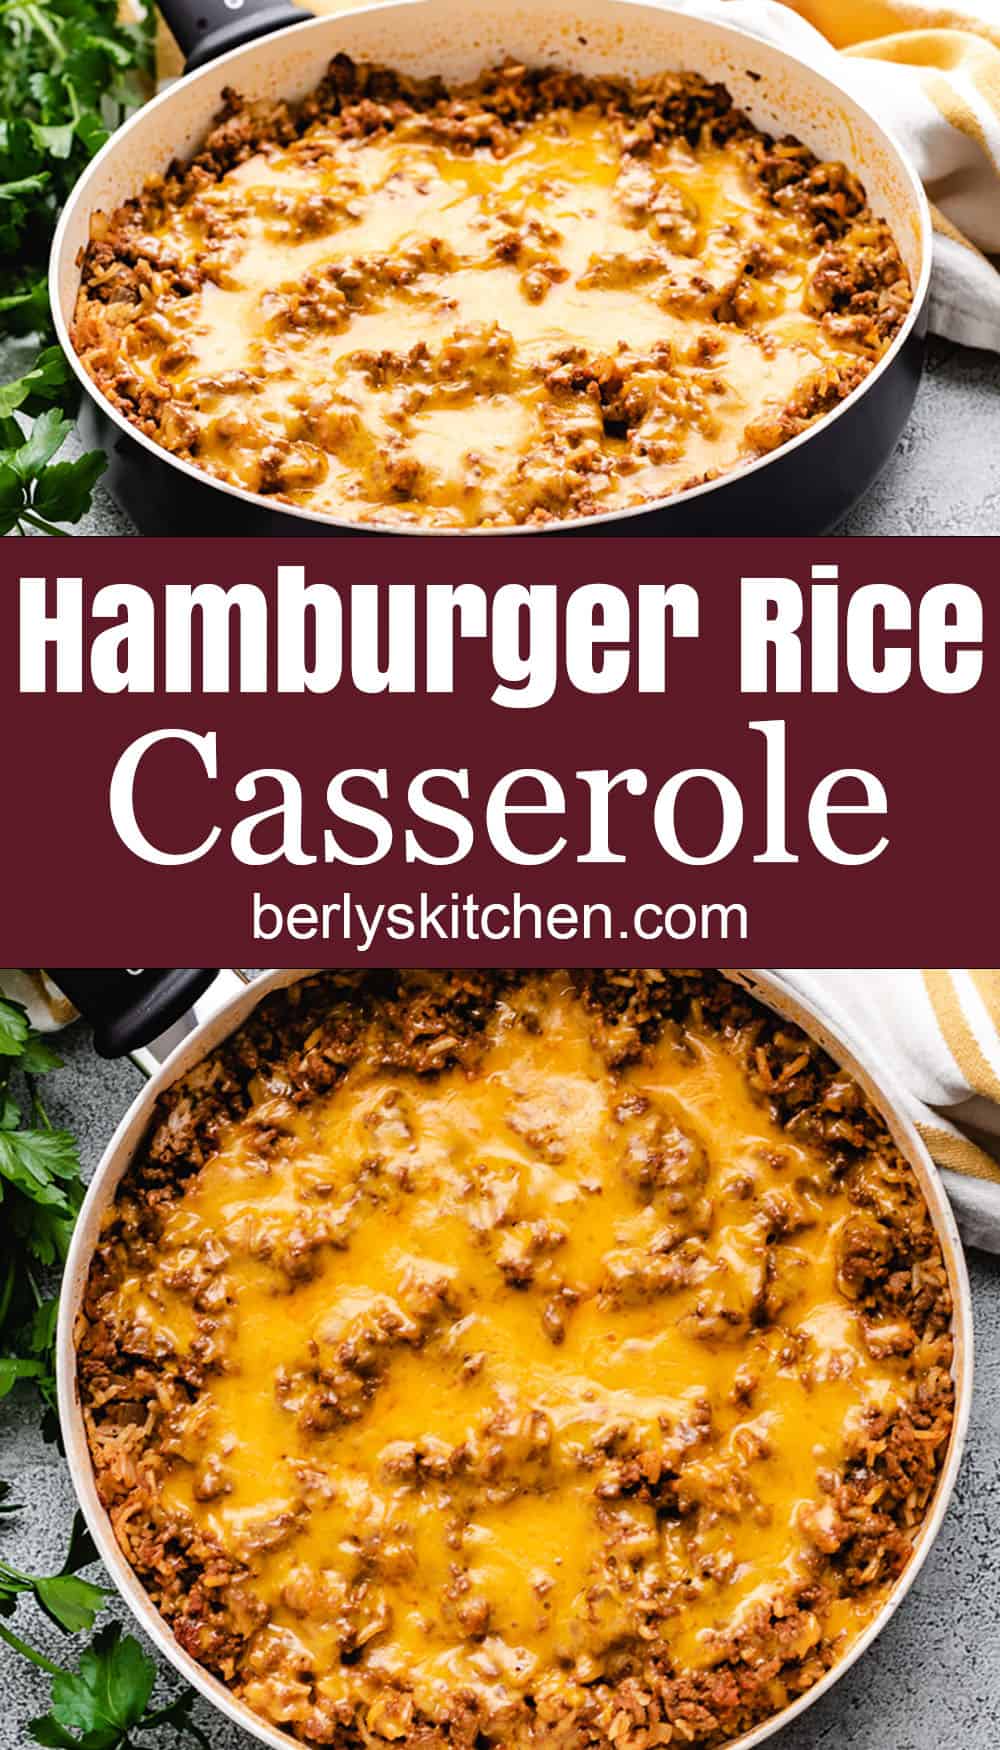 Cheesy Hamburger Rice Casserole | Berly's Kitchen